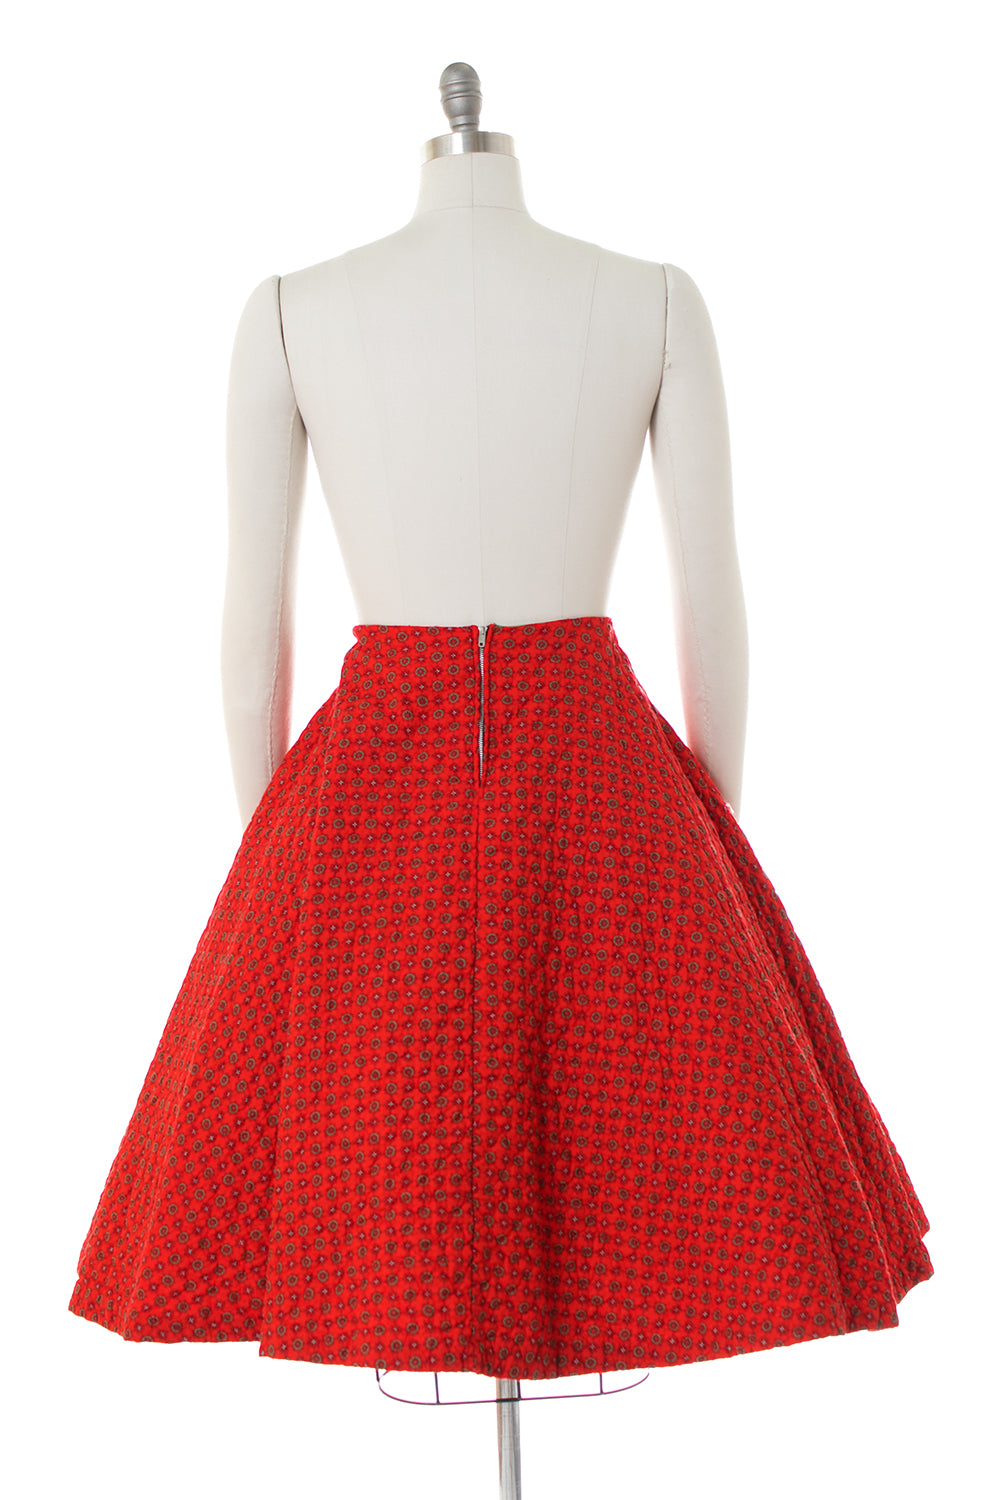 1950s Geometric Printed Cotton Circle Skirt